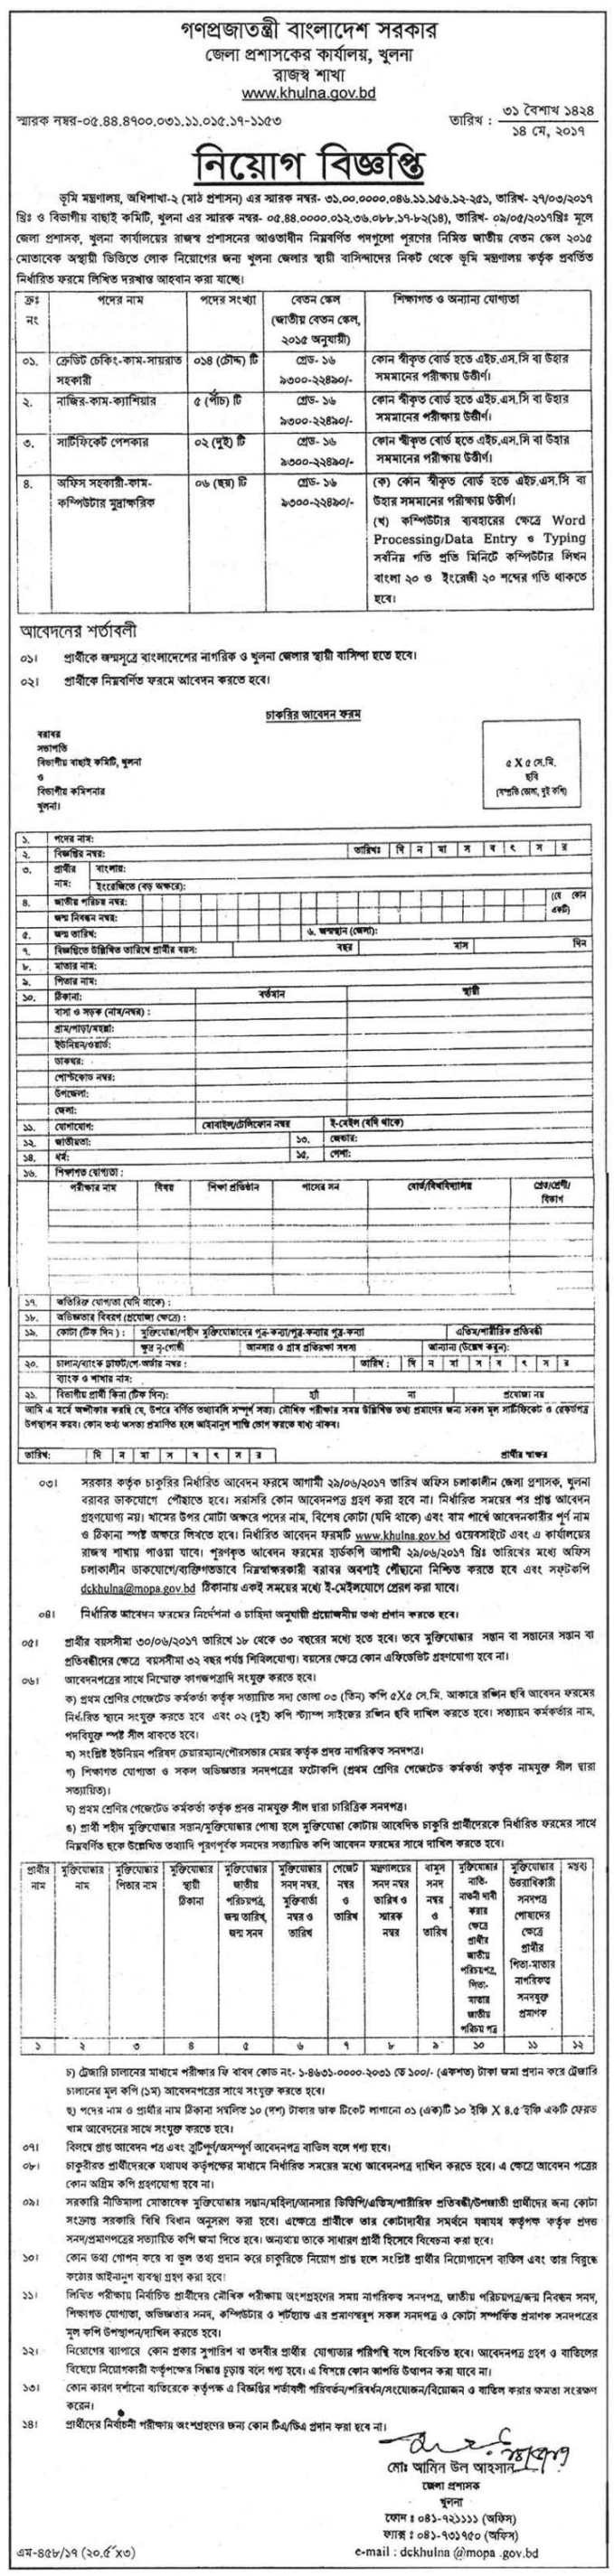 Khulna District Administrator's Office Job Circular 2017